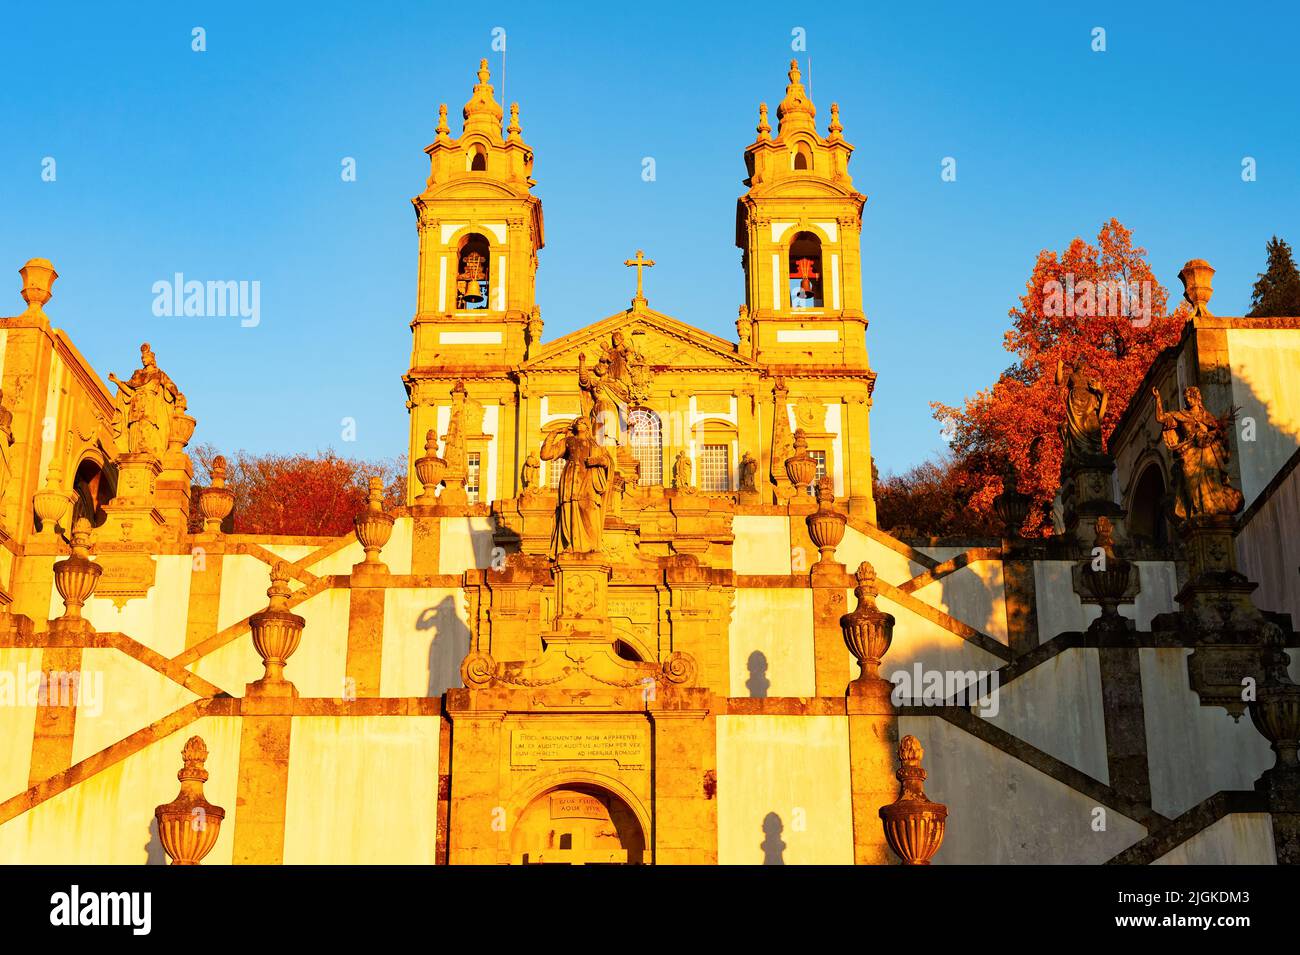 Bom Jesus do monte, baroque church sunset view, Braga, Portugal Stock Photo